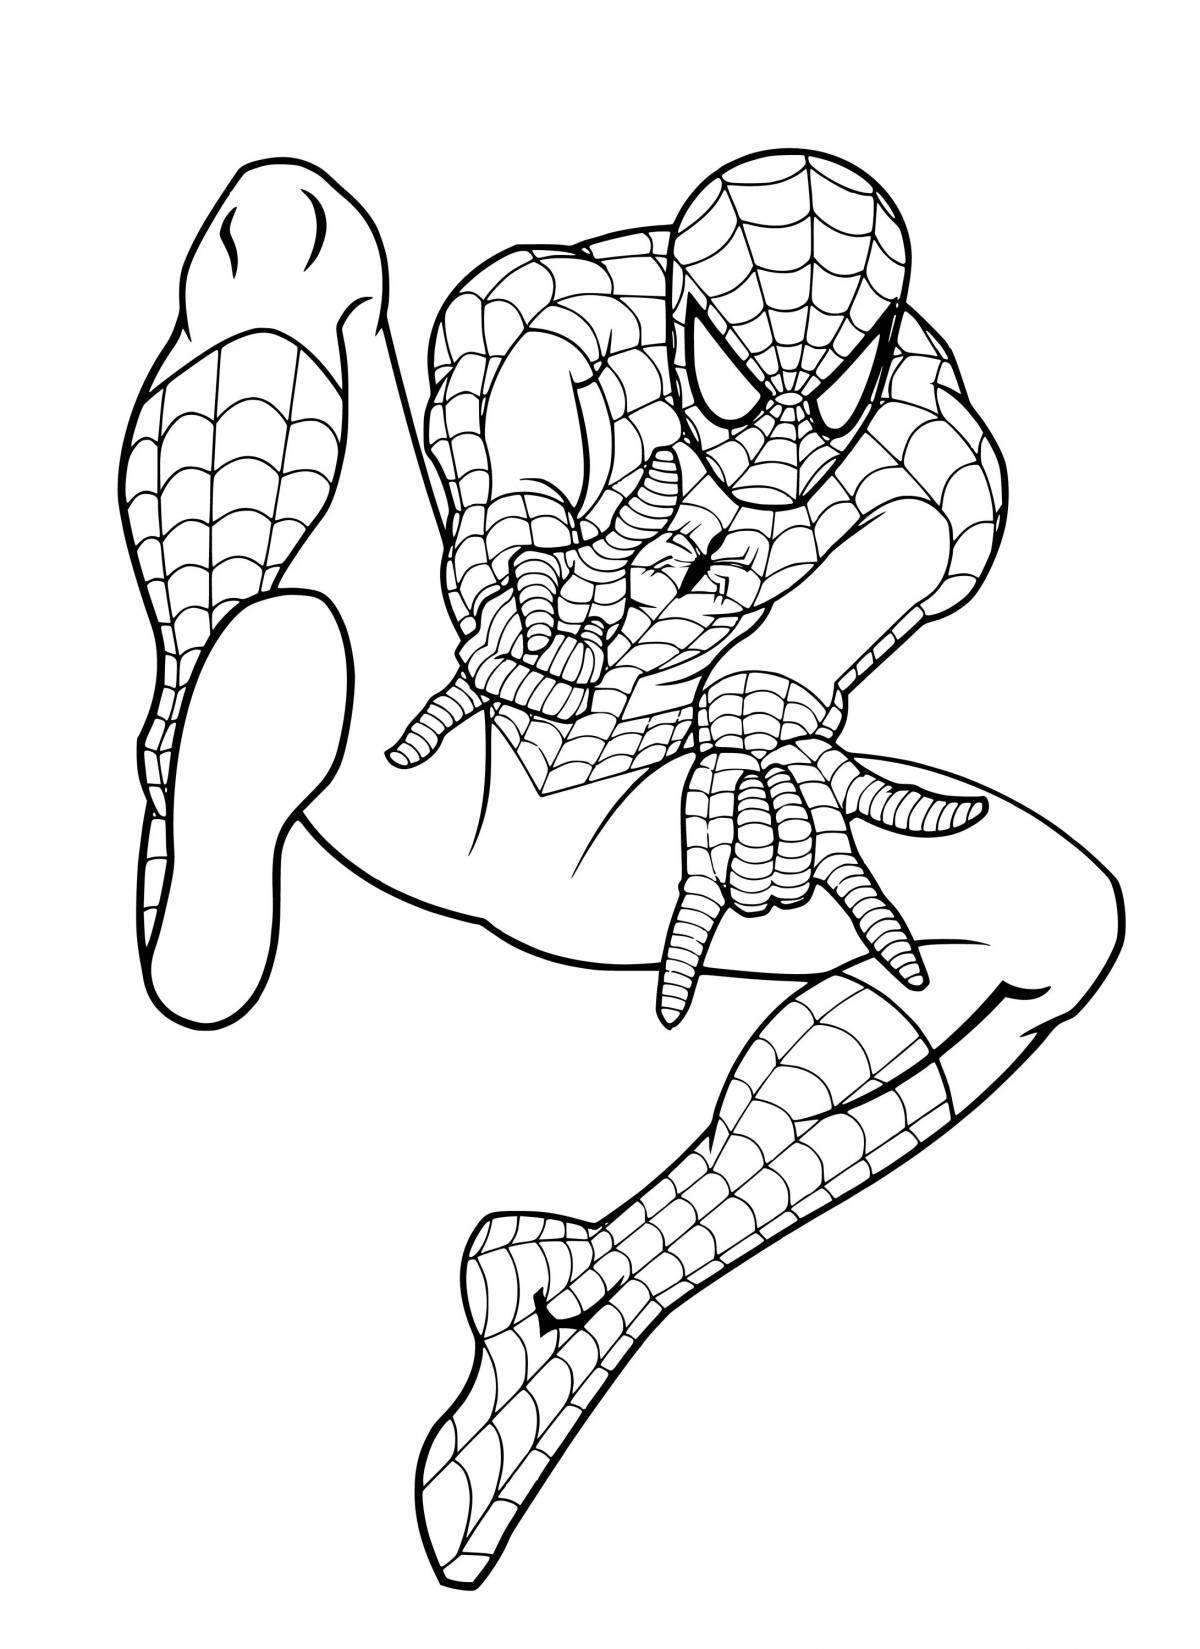 Joyful spider-man coloring book